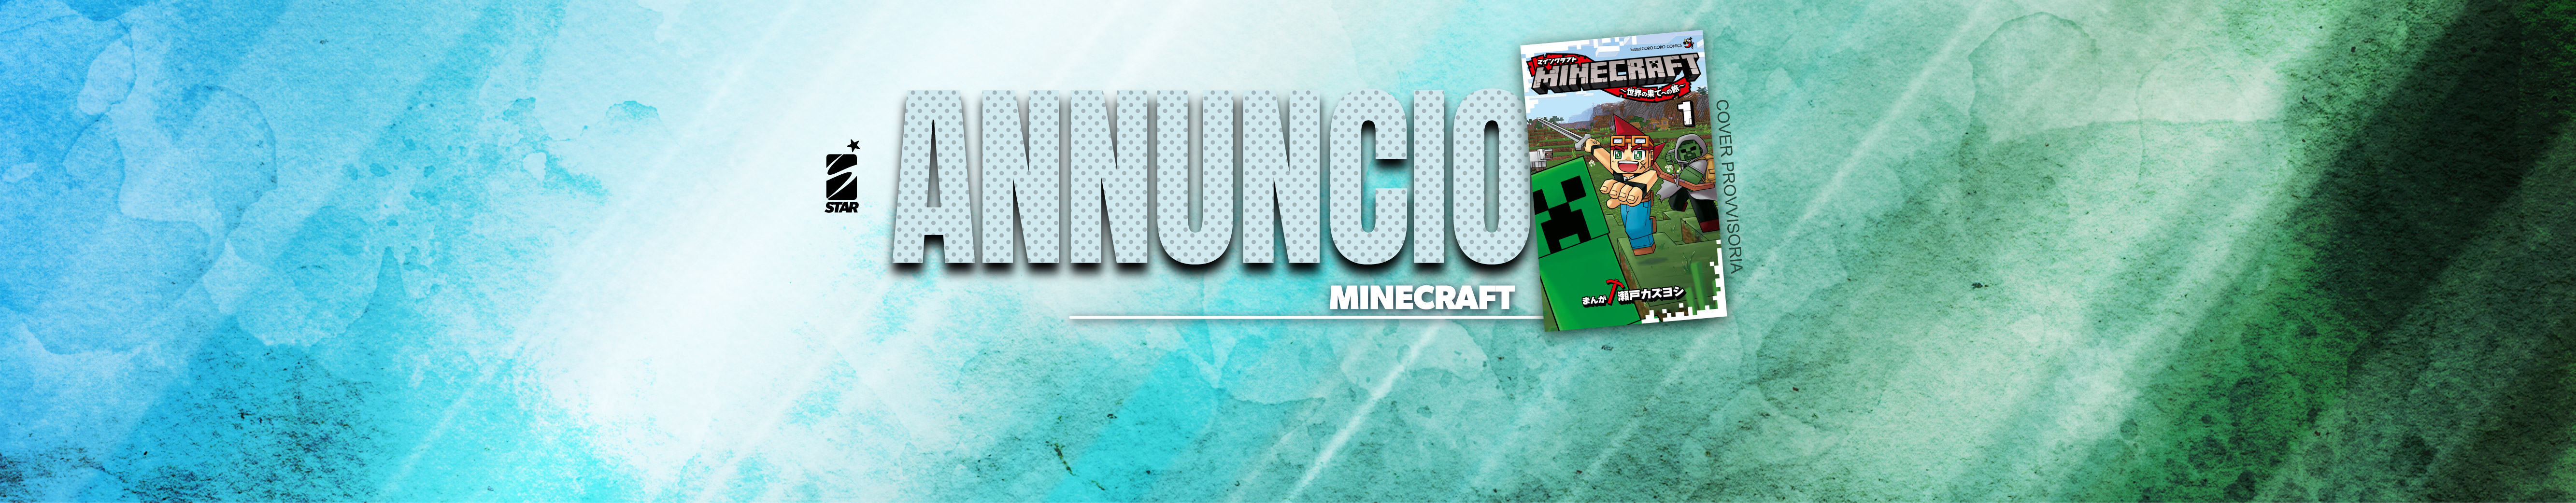 Annuncio - Minecraft-HOME.jpg